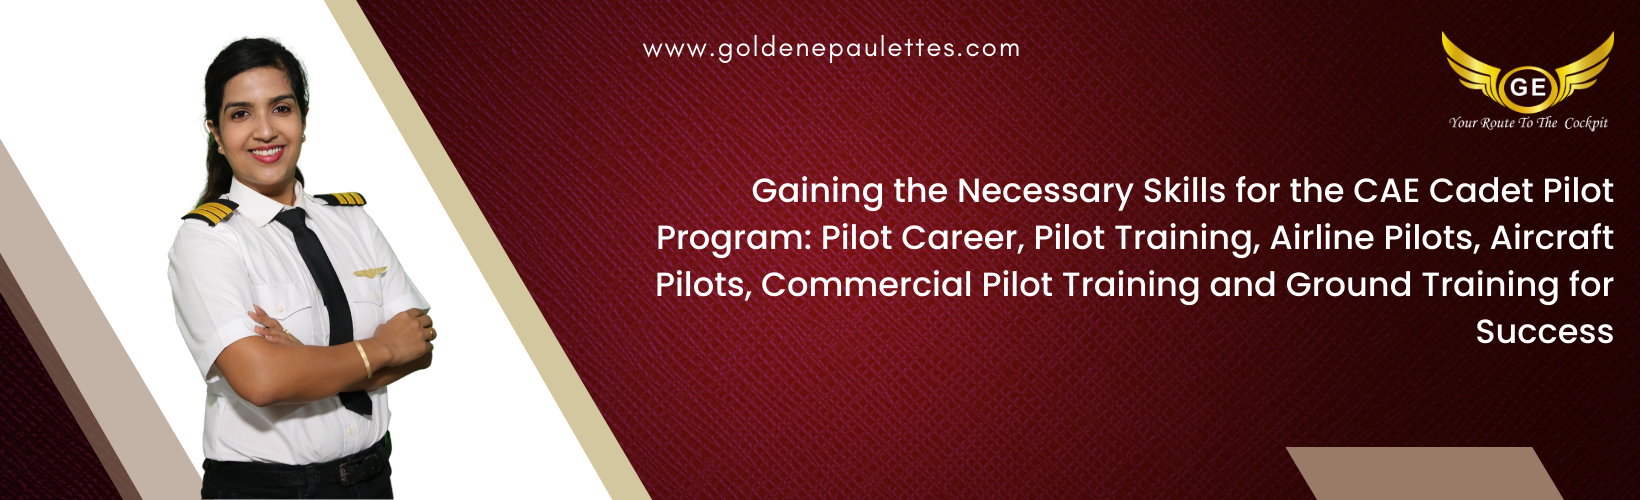 Gaining the Necessary Skills for the CAE Cadet Pilot Program